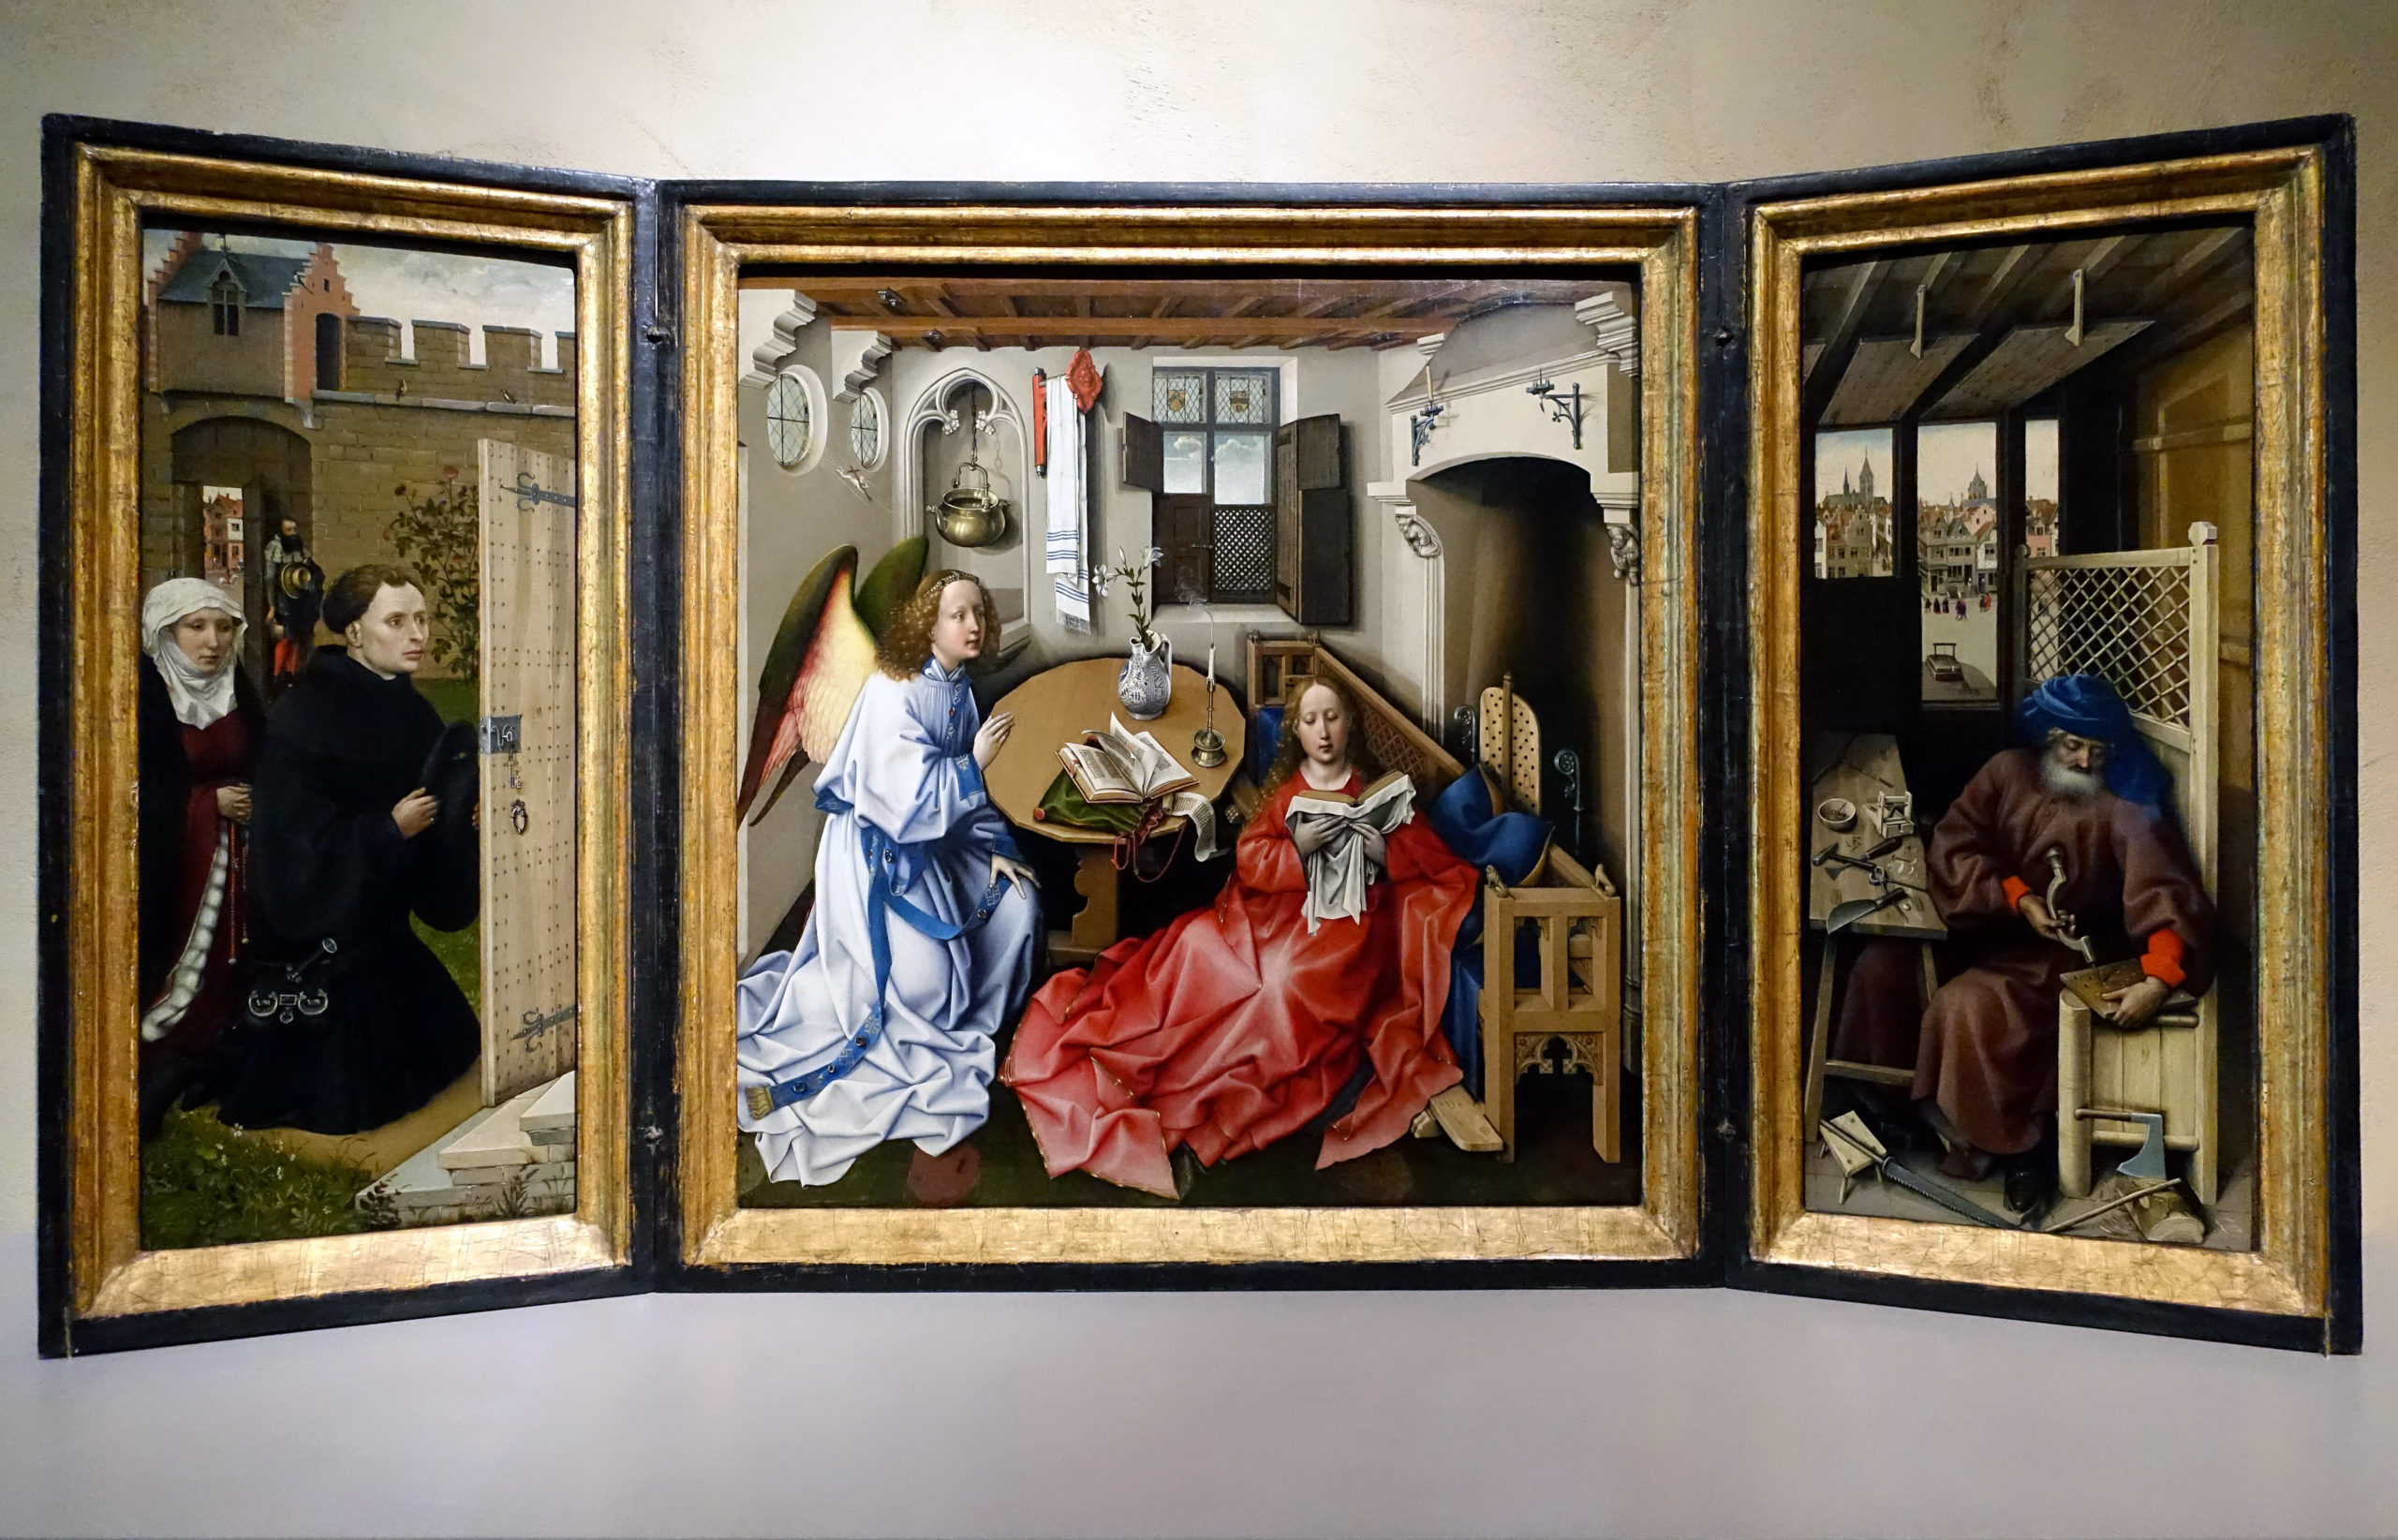 Workshop of Robert Campin, Annunciation Triptych (Merode Altarpiece), c. 1427–32, oil on oak panel, open 64.5 x 117.8 cm, central panel 64.1 x 63.2 cm, each wing 64.5 x 27.3 cm (The Cloisters, The Metropolitan Museum of Art)